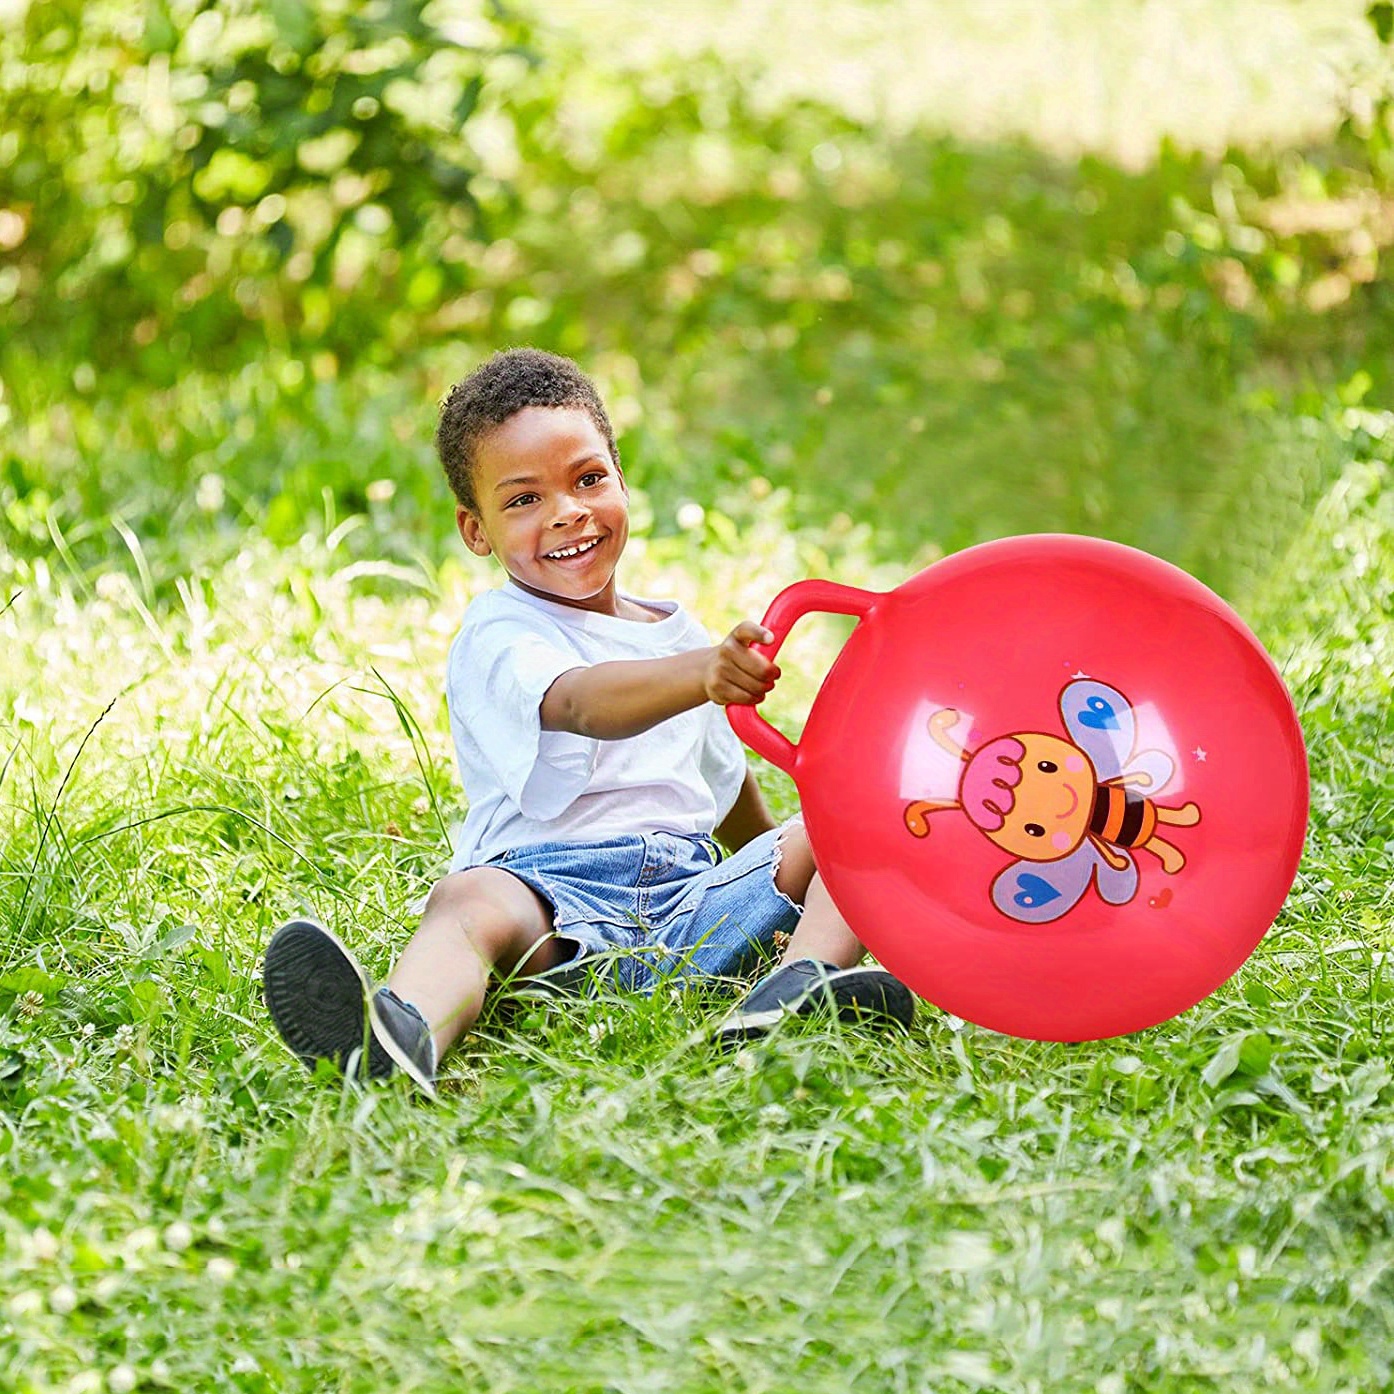 Pelota saltarina para niños de 7 a 9 años (pelota hippity hop, hopping  ball, pelota saltarina con asas, sit & bounce, canguro saltarín, pelota de